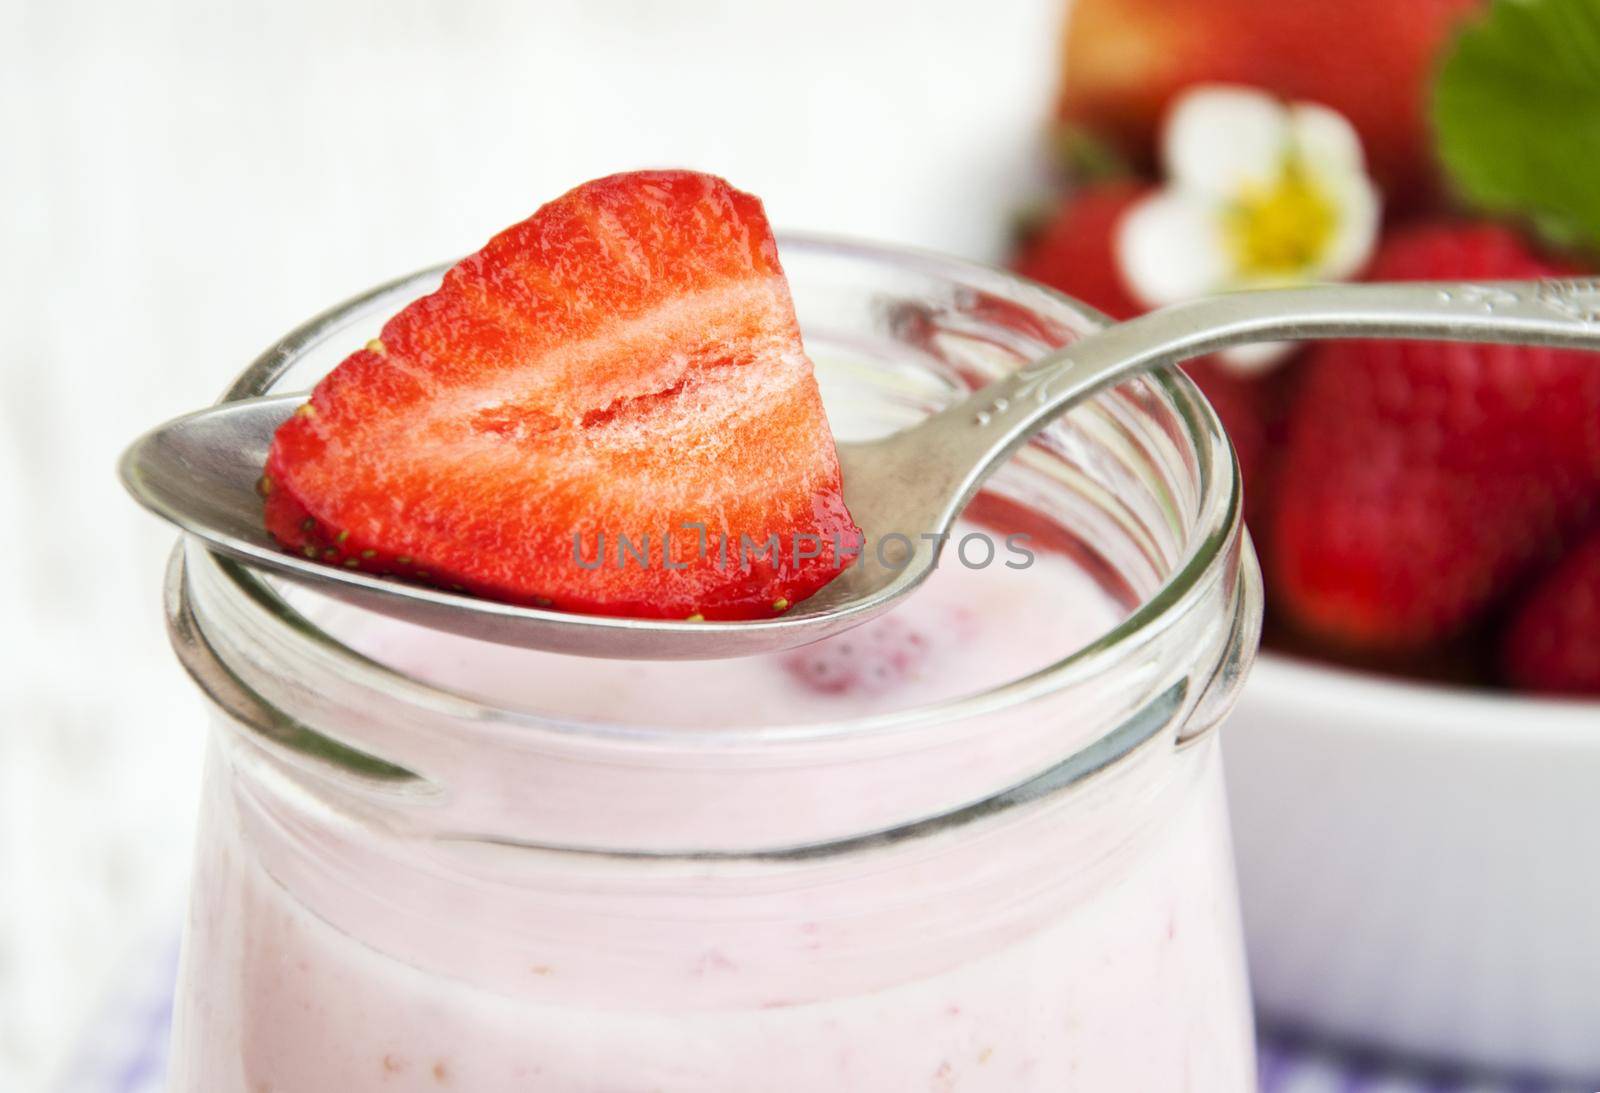 Strawberry yogurt with fresh strawberries on a wooden background